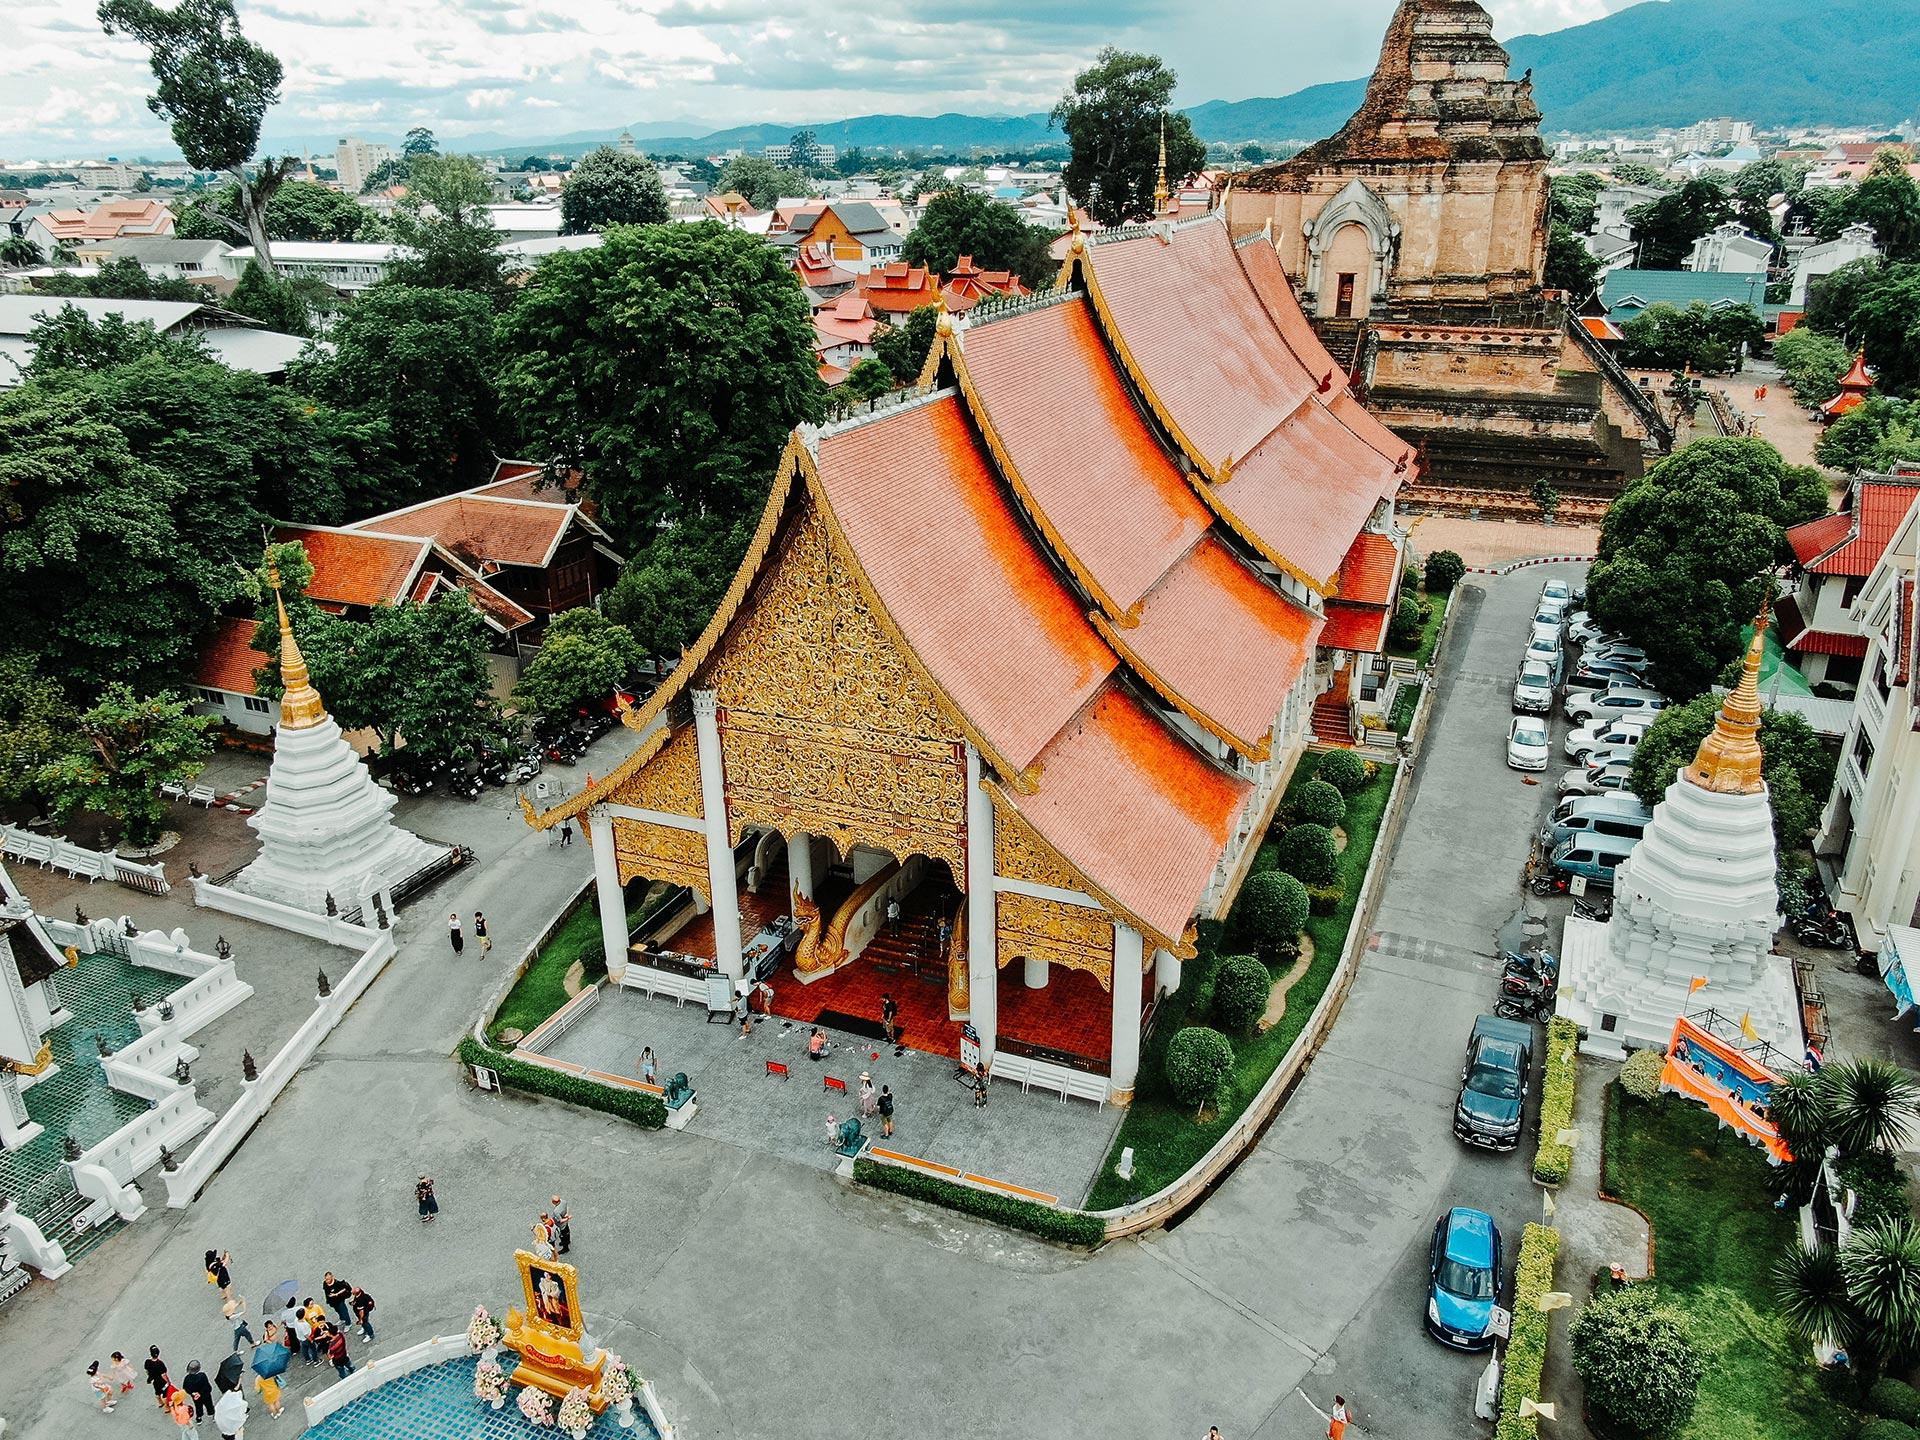 City of Chiang Mai